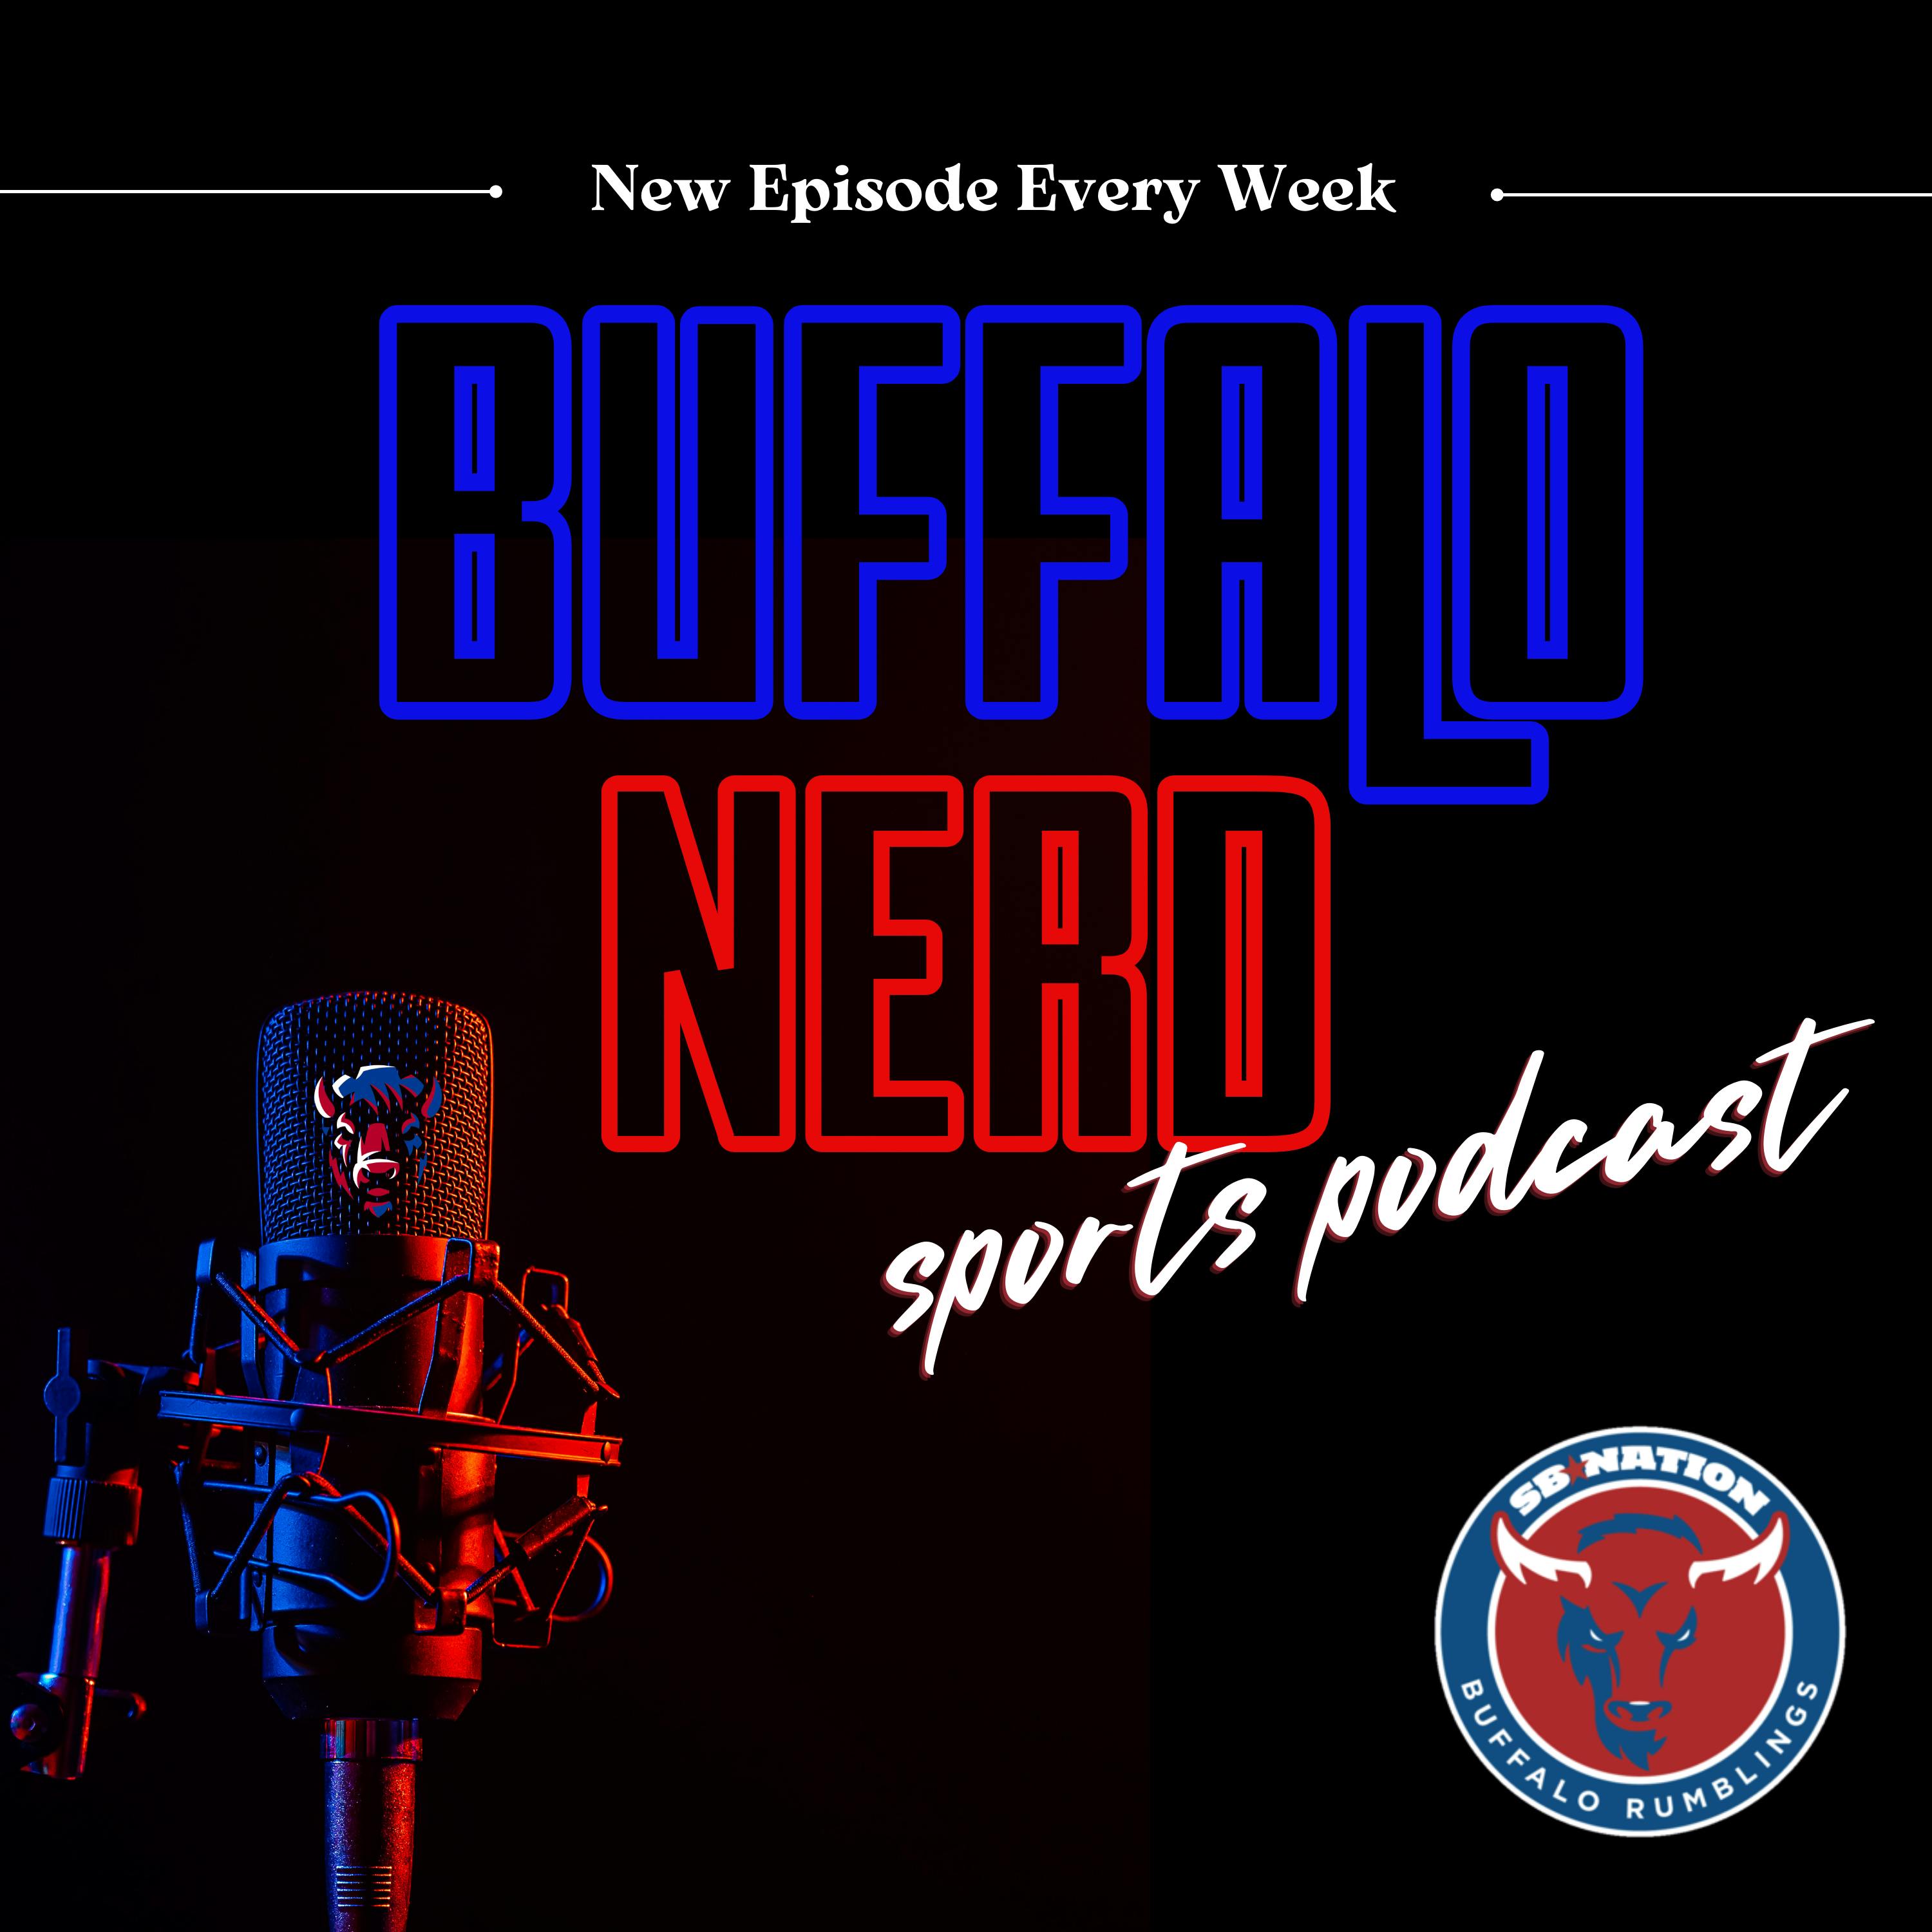 BNSP - Pittsburg Steelers vs. Buffalo Bills Preview: Blowout in Buffalo?